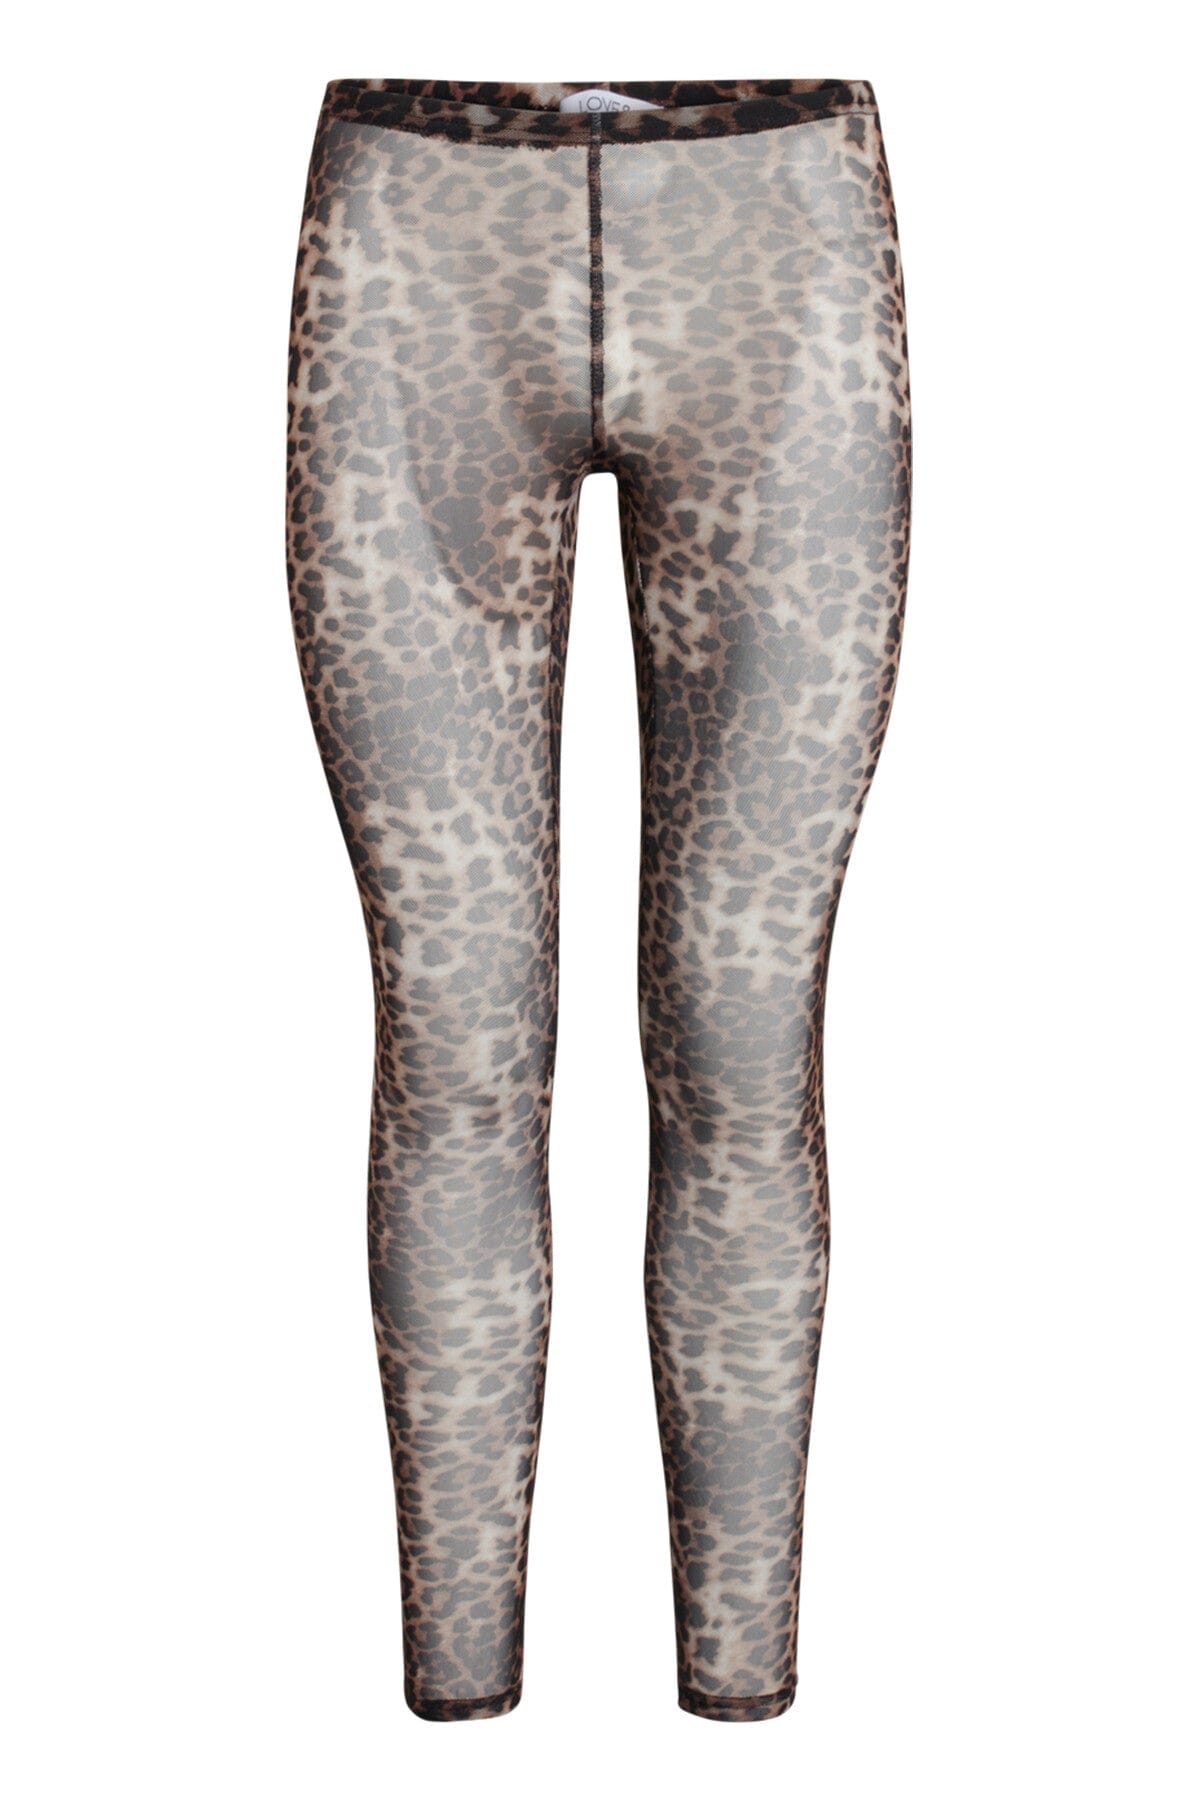 Sisters Point - Love Leggings - Leopard print